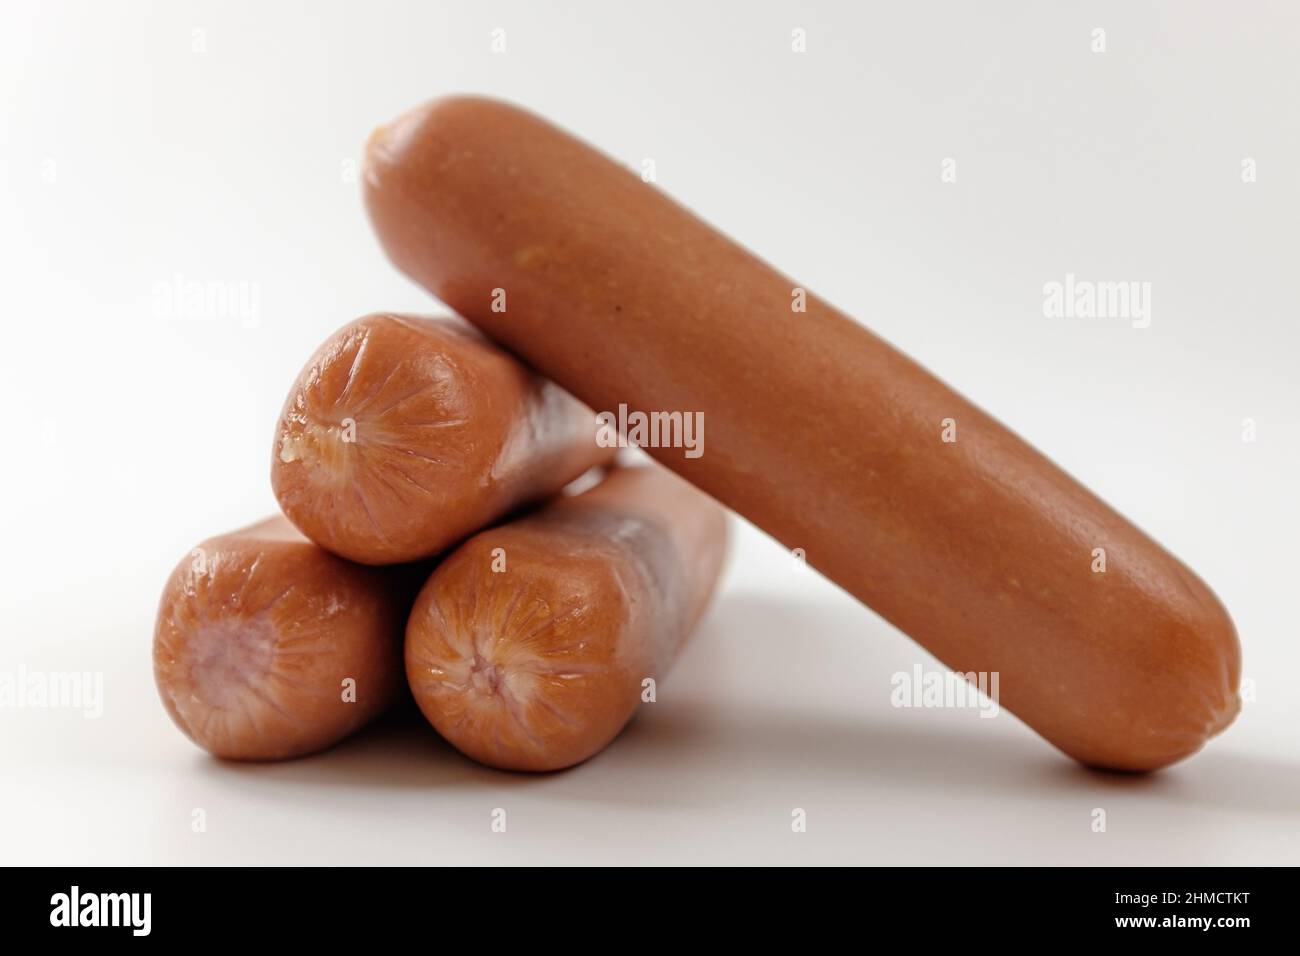 frankfurter sausage on a white background Stock Photo